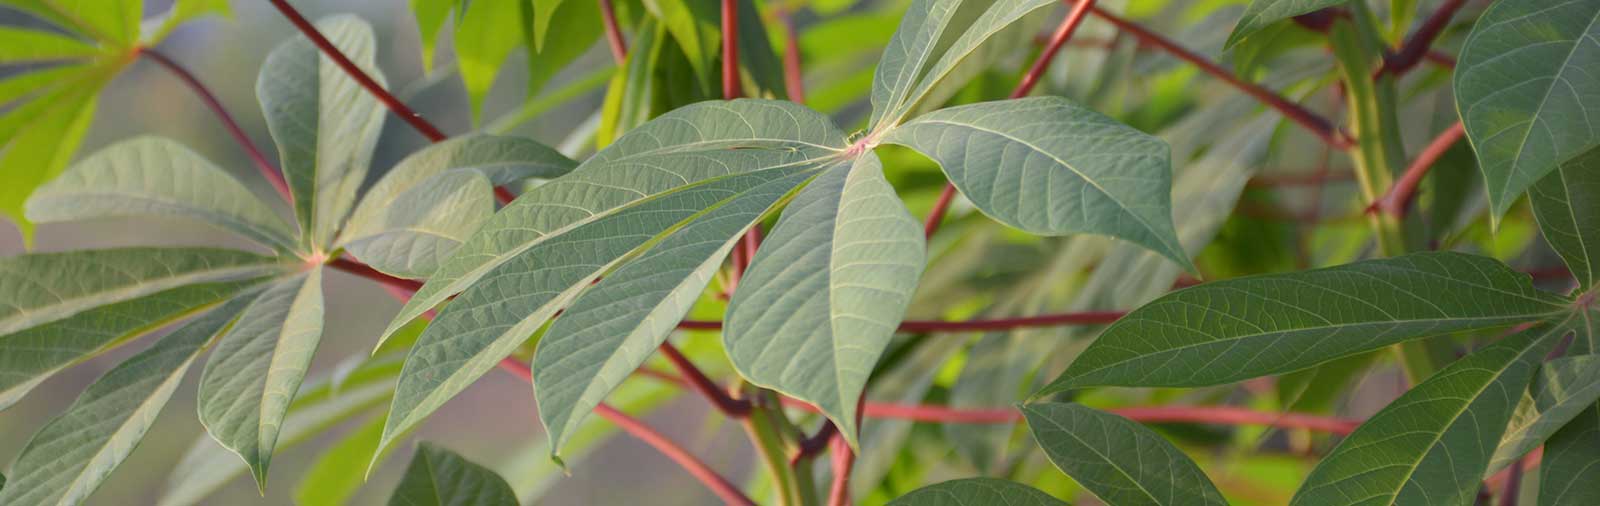 Cassava - Manihot esculenta Crantz